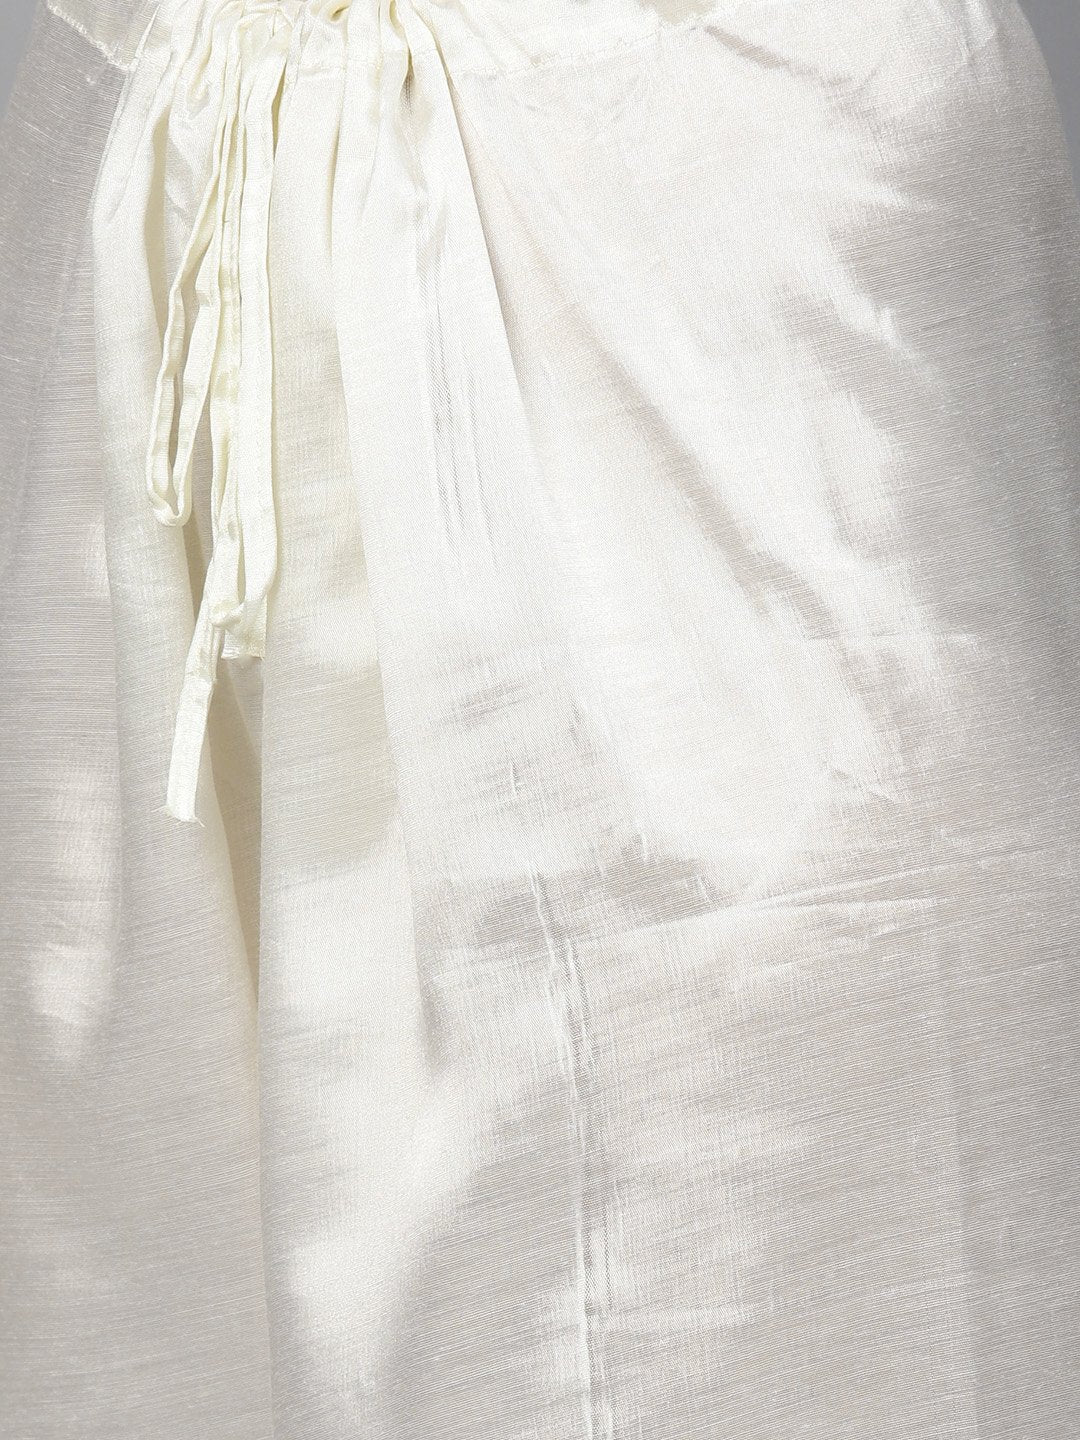 Ishin Women's Chanderi Cotton White Embellished A-Line Kurta Palazzo Dupatta Set